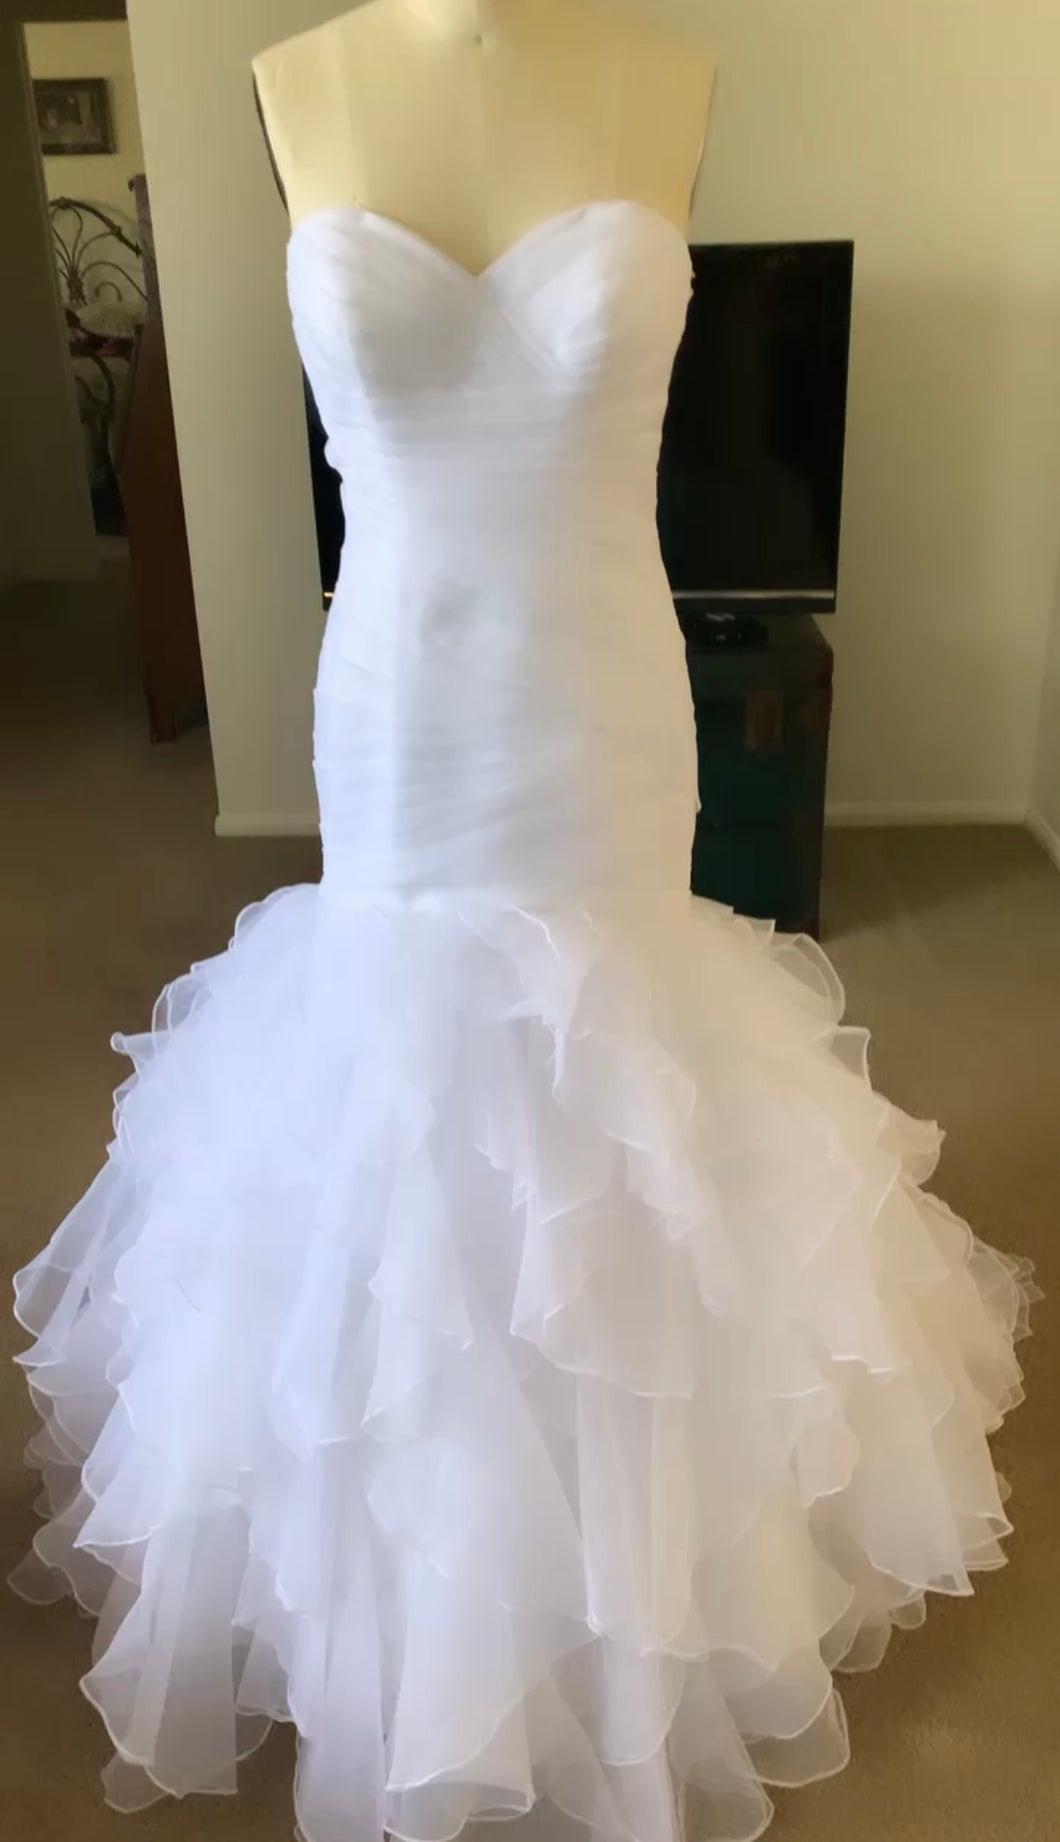 Davids Bridal 'WG3832 Organza Mermaid Wedding Dress with Ruffled Skirt' wedding dress size-06 PREOWNED